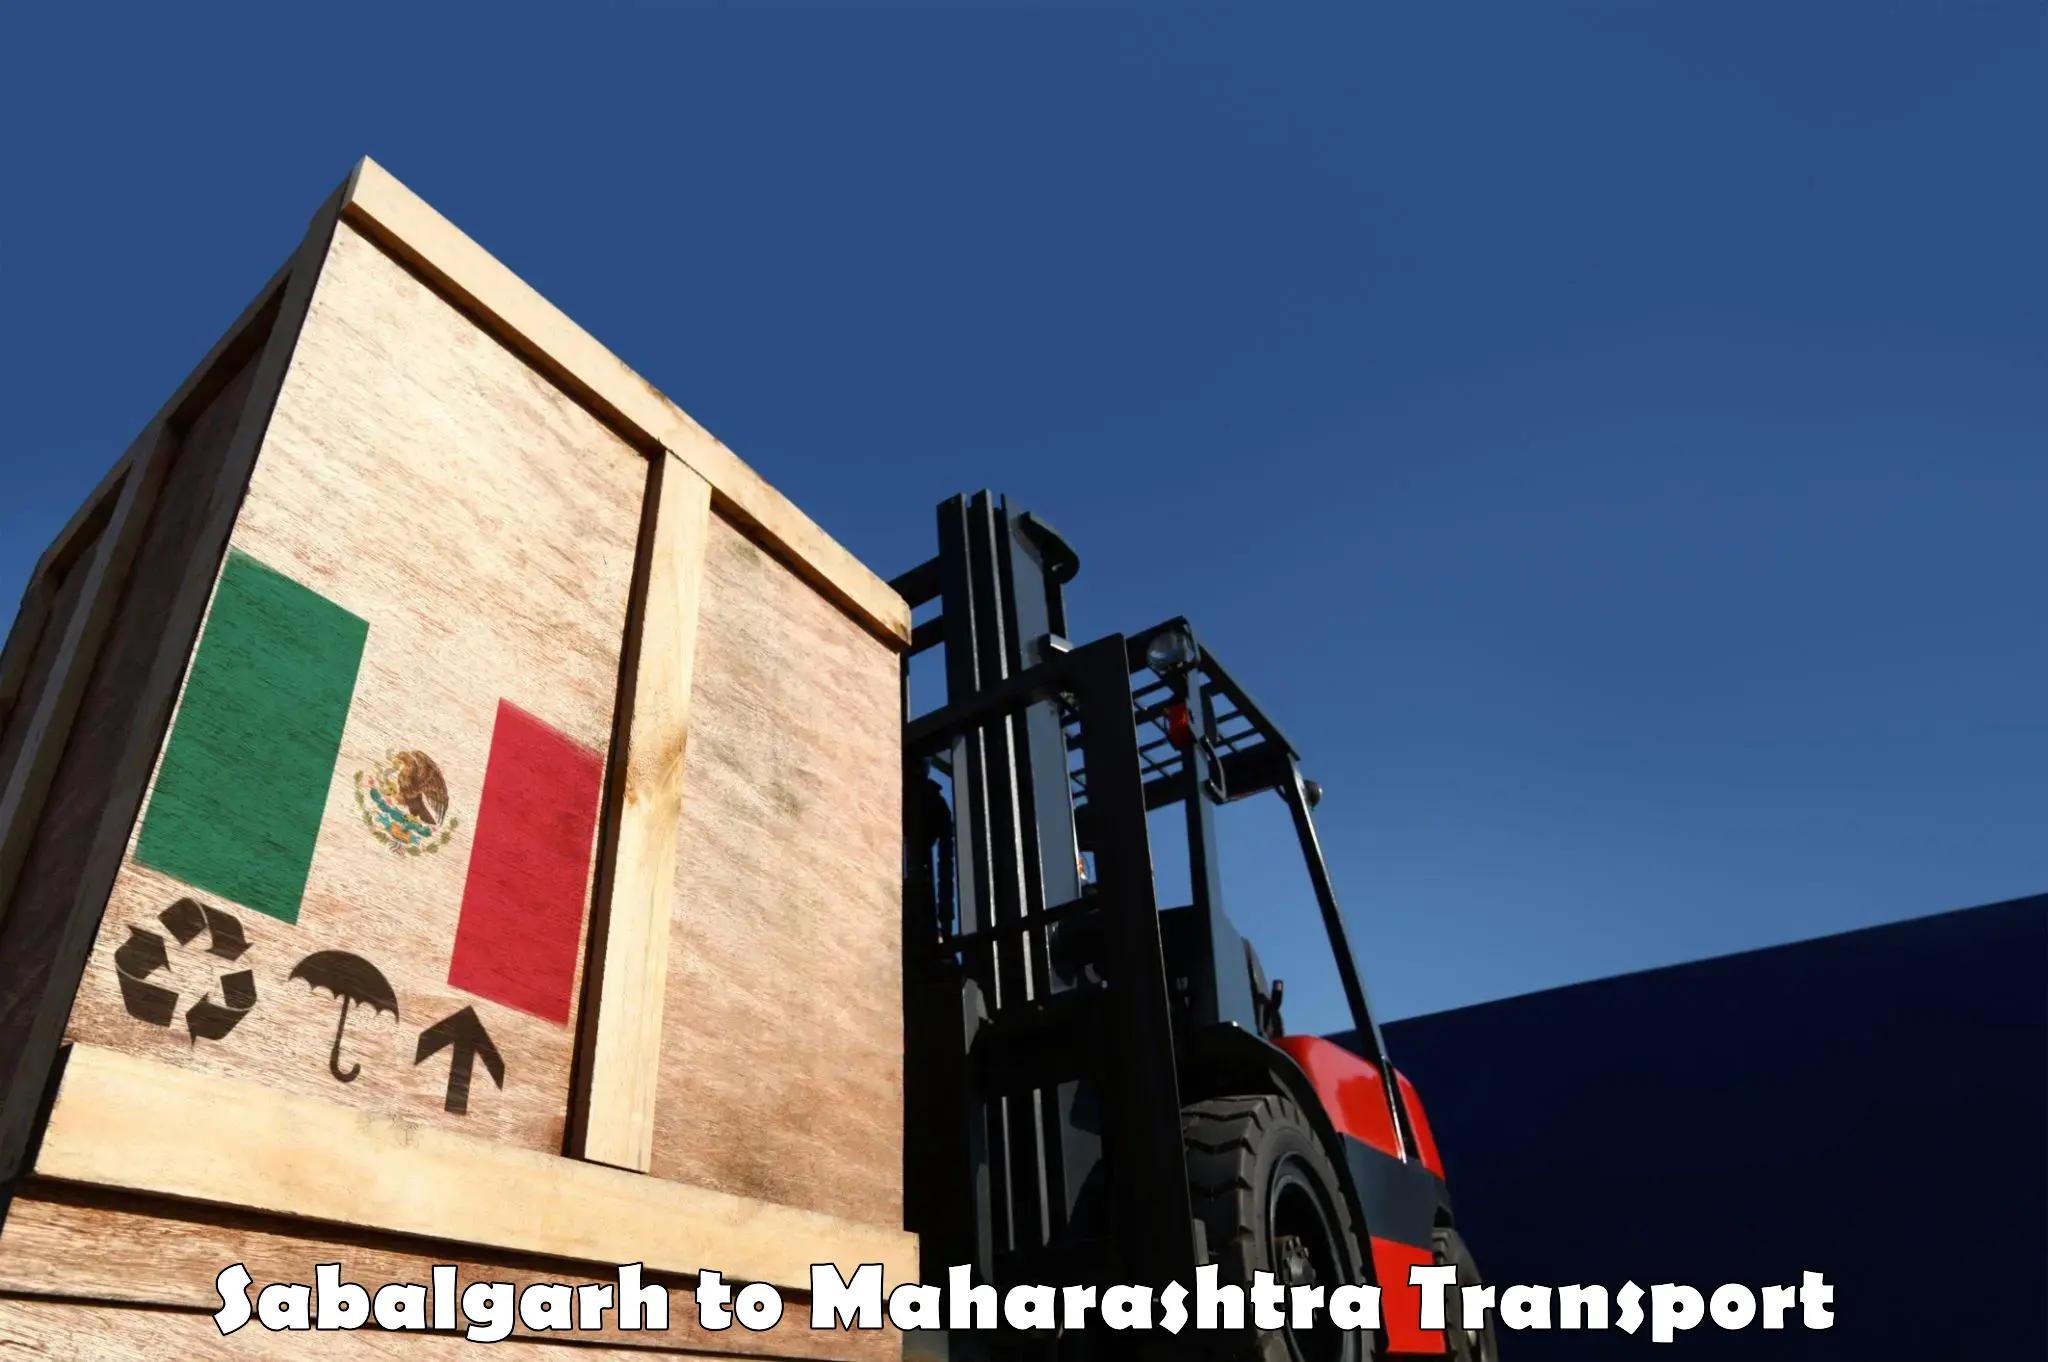 Truck transport companies in India Sabalgarh to Lasalgaon